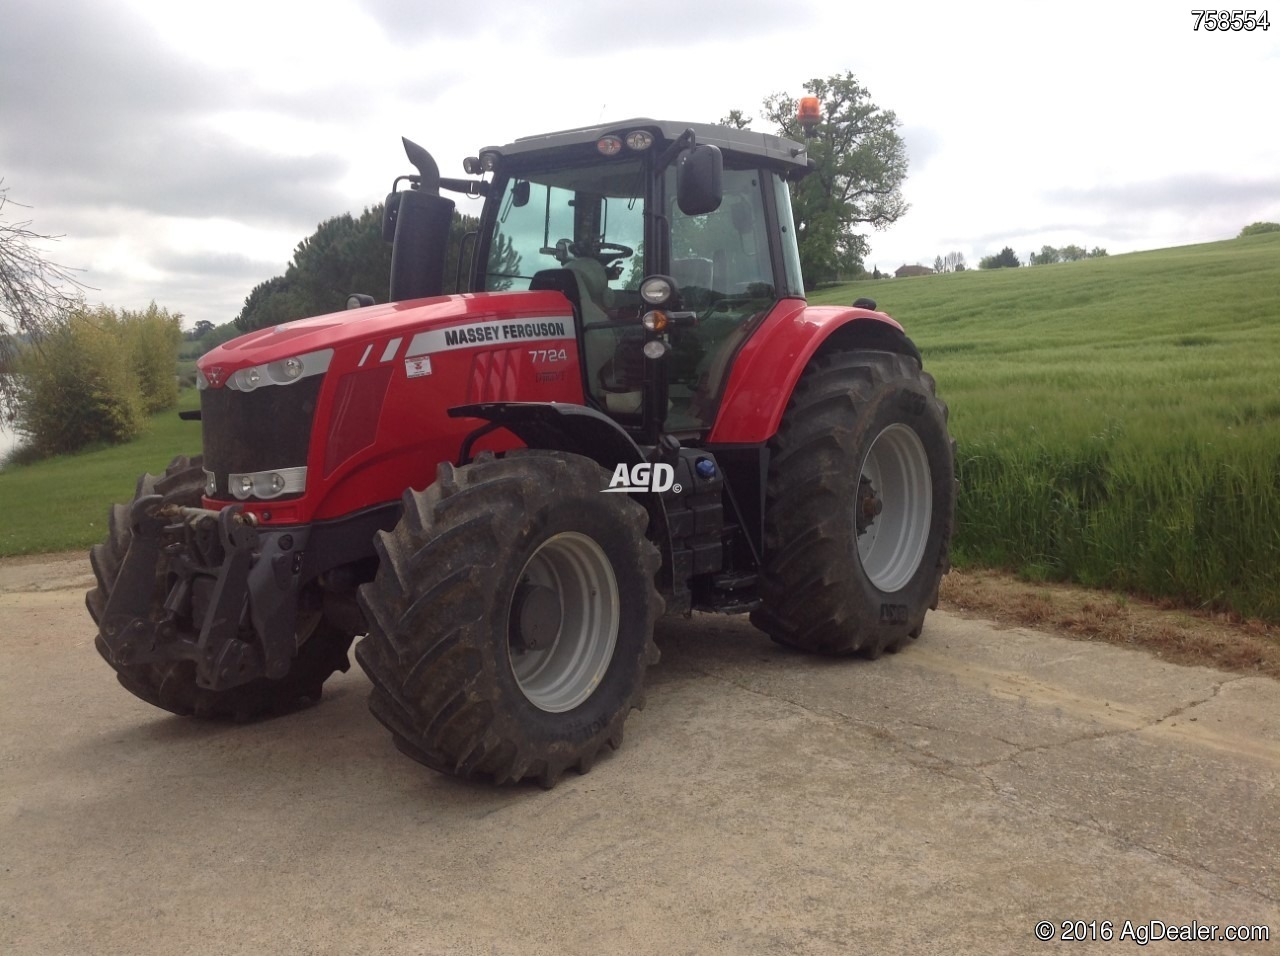 2015 Massey Ferguson 7724 Tractor For Sale | AgDealer.com